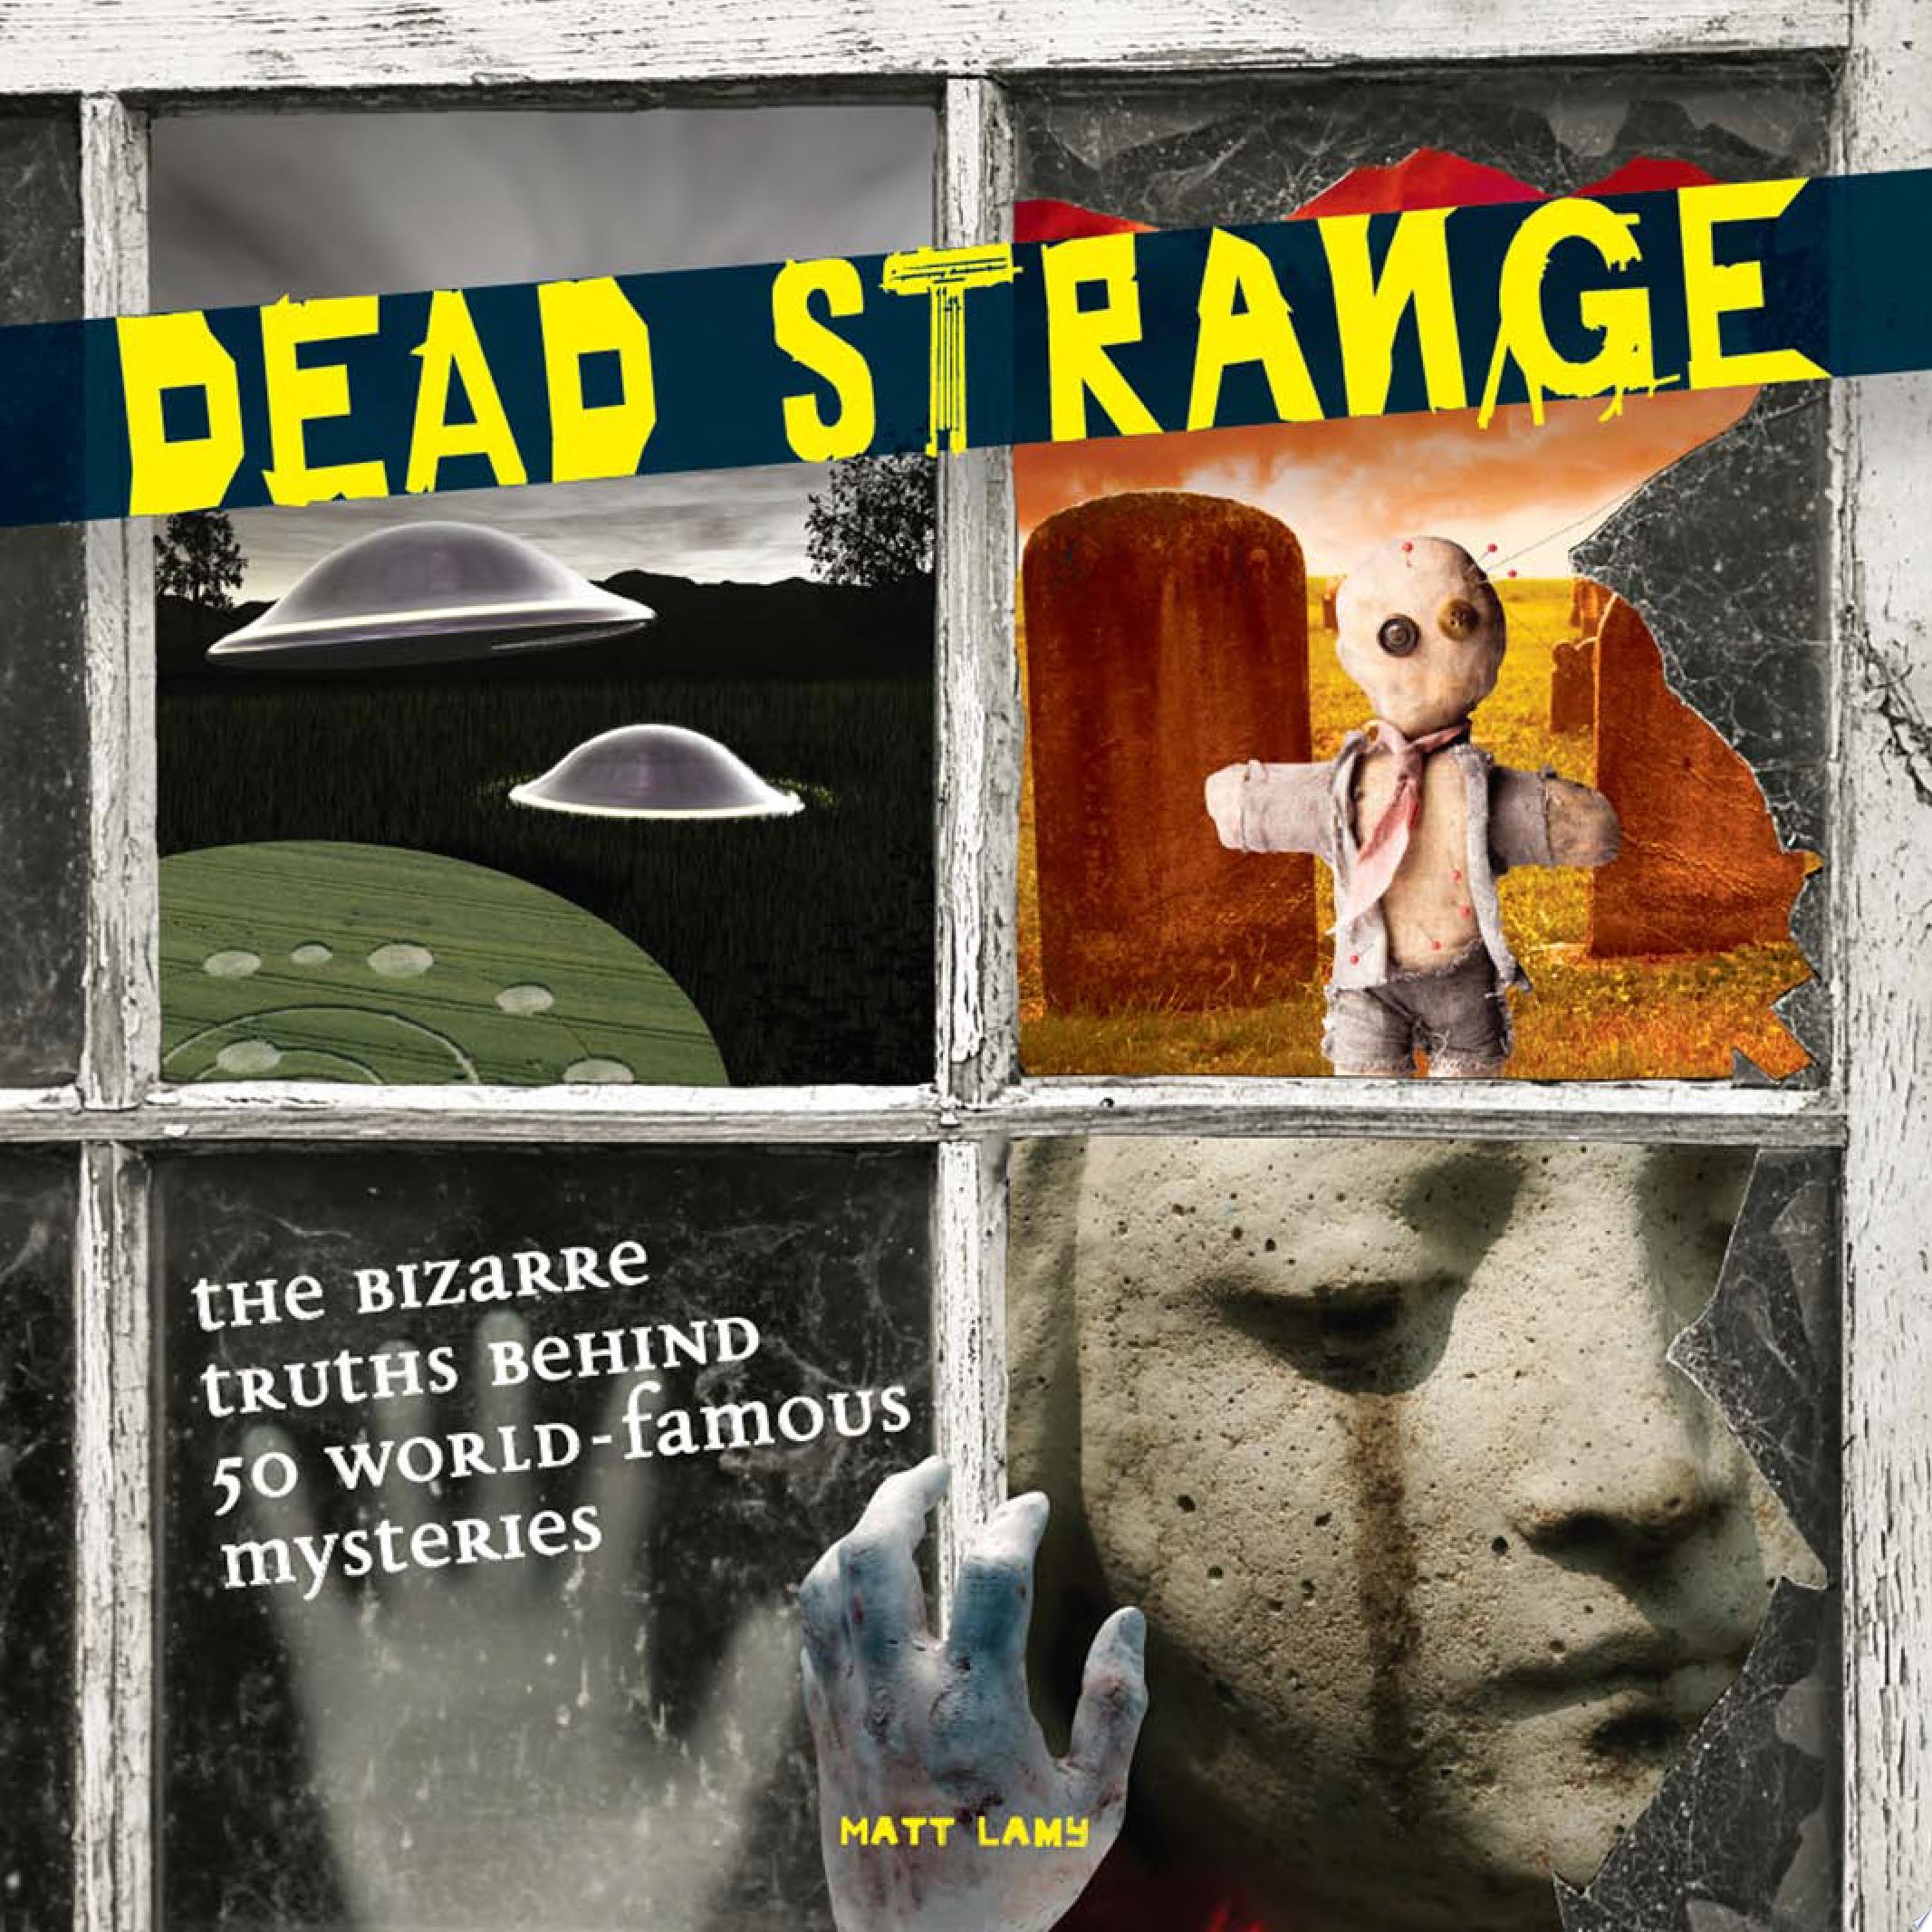 Image for "Dead Strange"